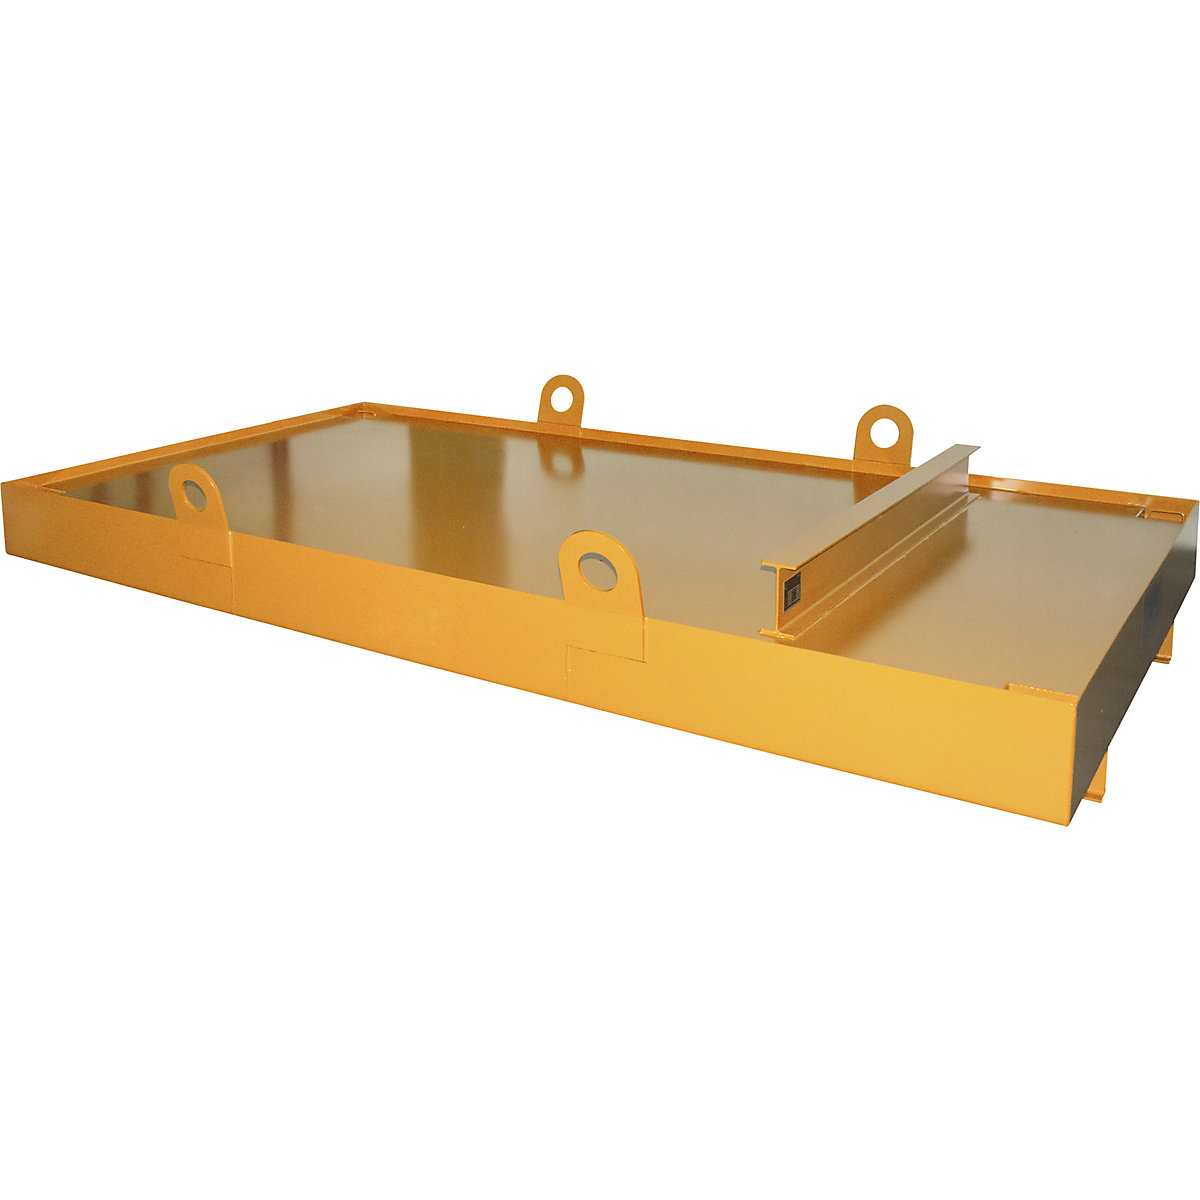 Sump tray for skip trailer – eurokraft pro, for skip trailers, sump capacity 1276 l, orange-14